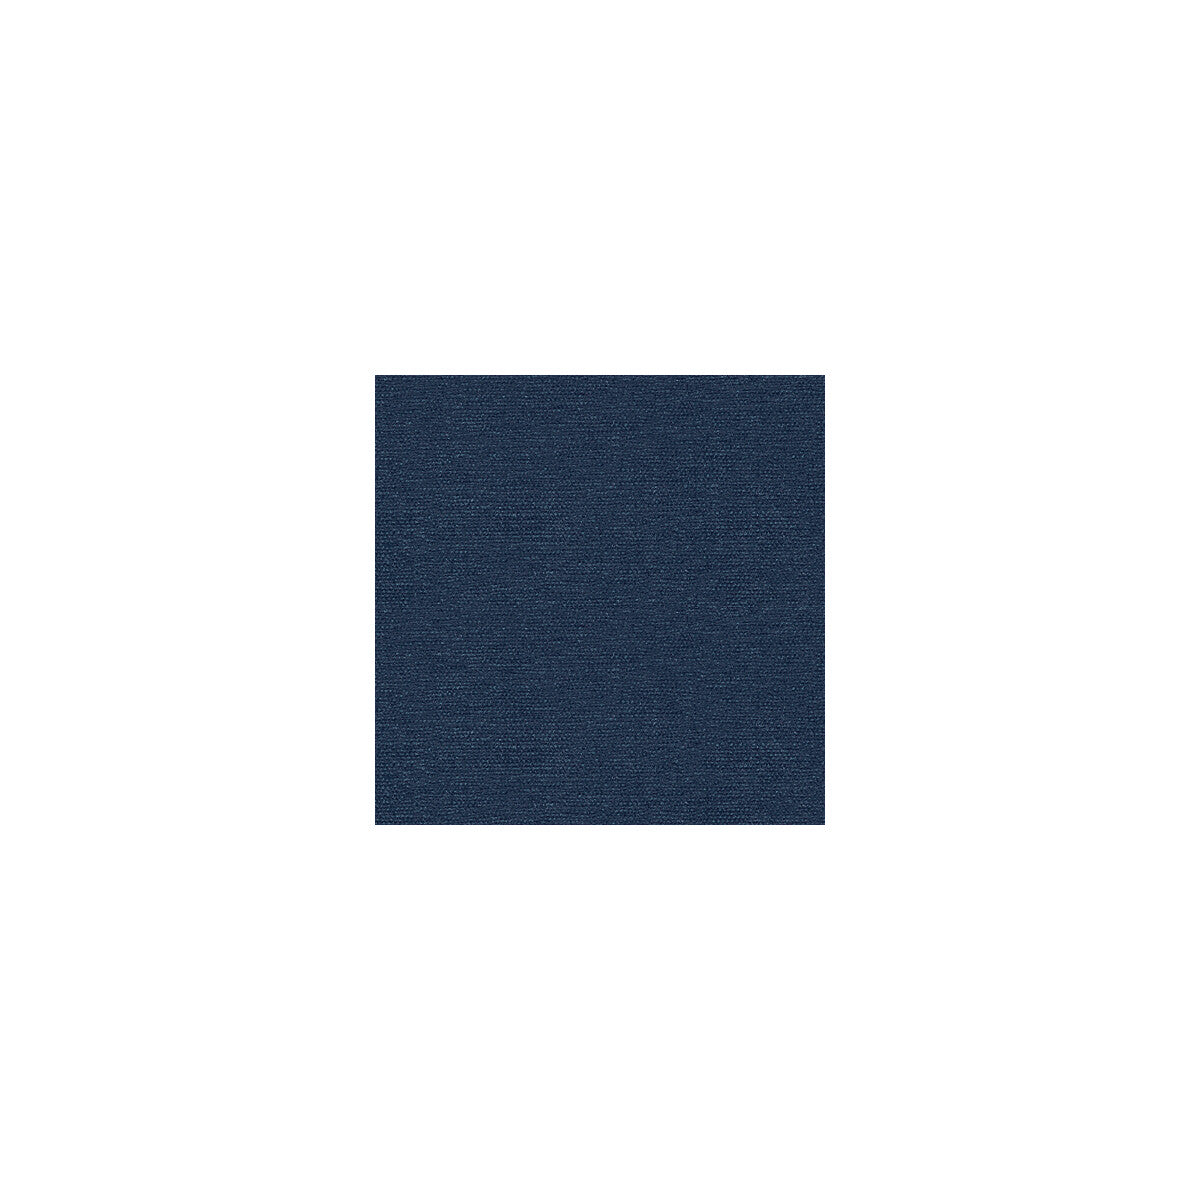 Kravet Smart fabric in 26837-5 color - pattern 26837.5.0 - by Kravet Smart